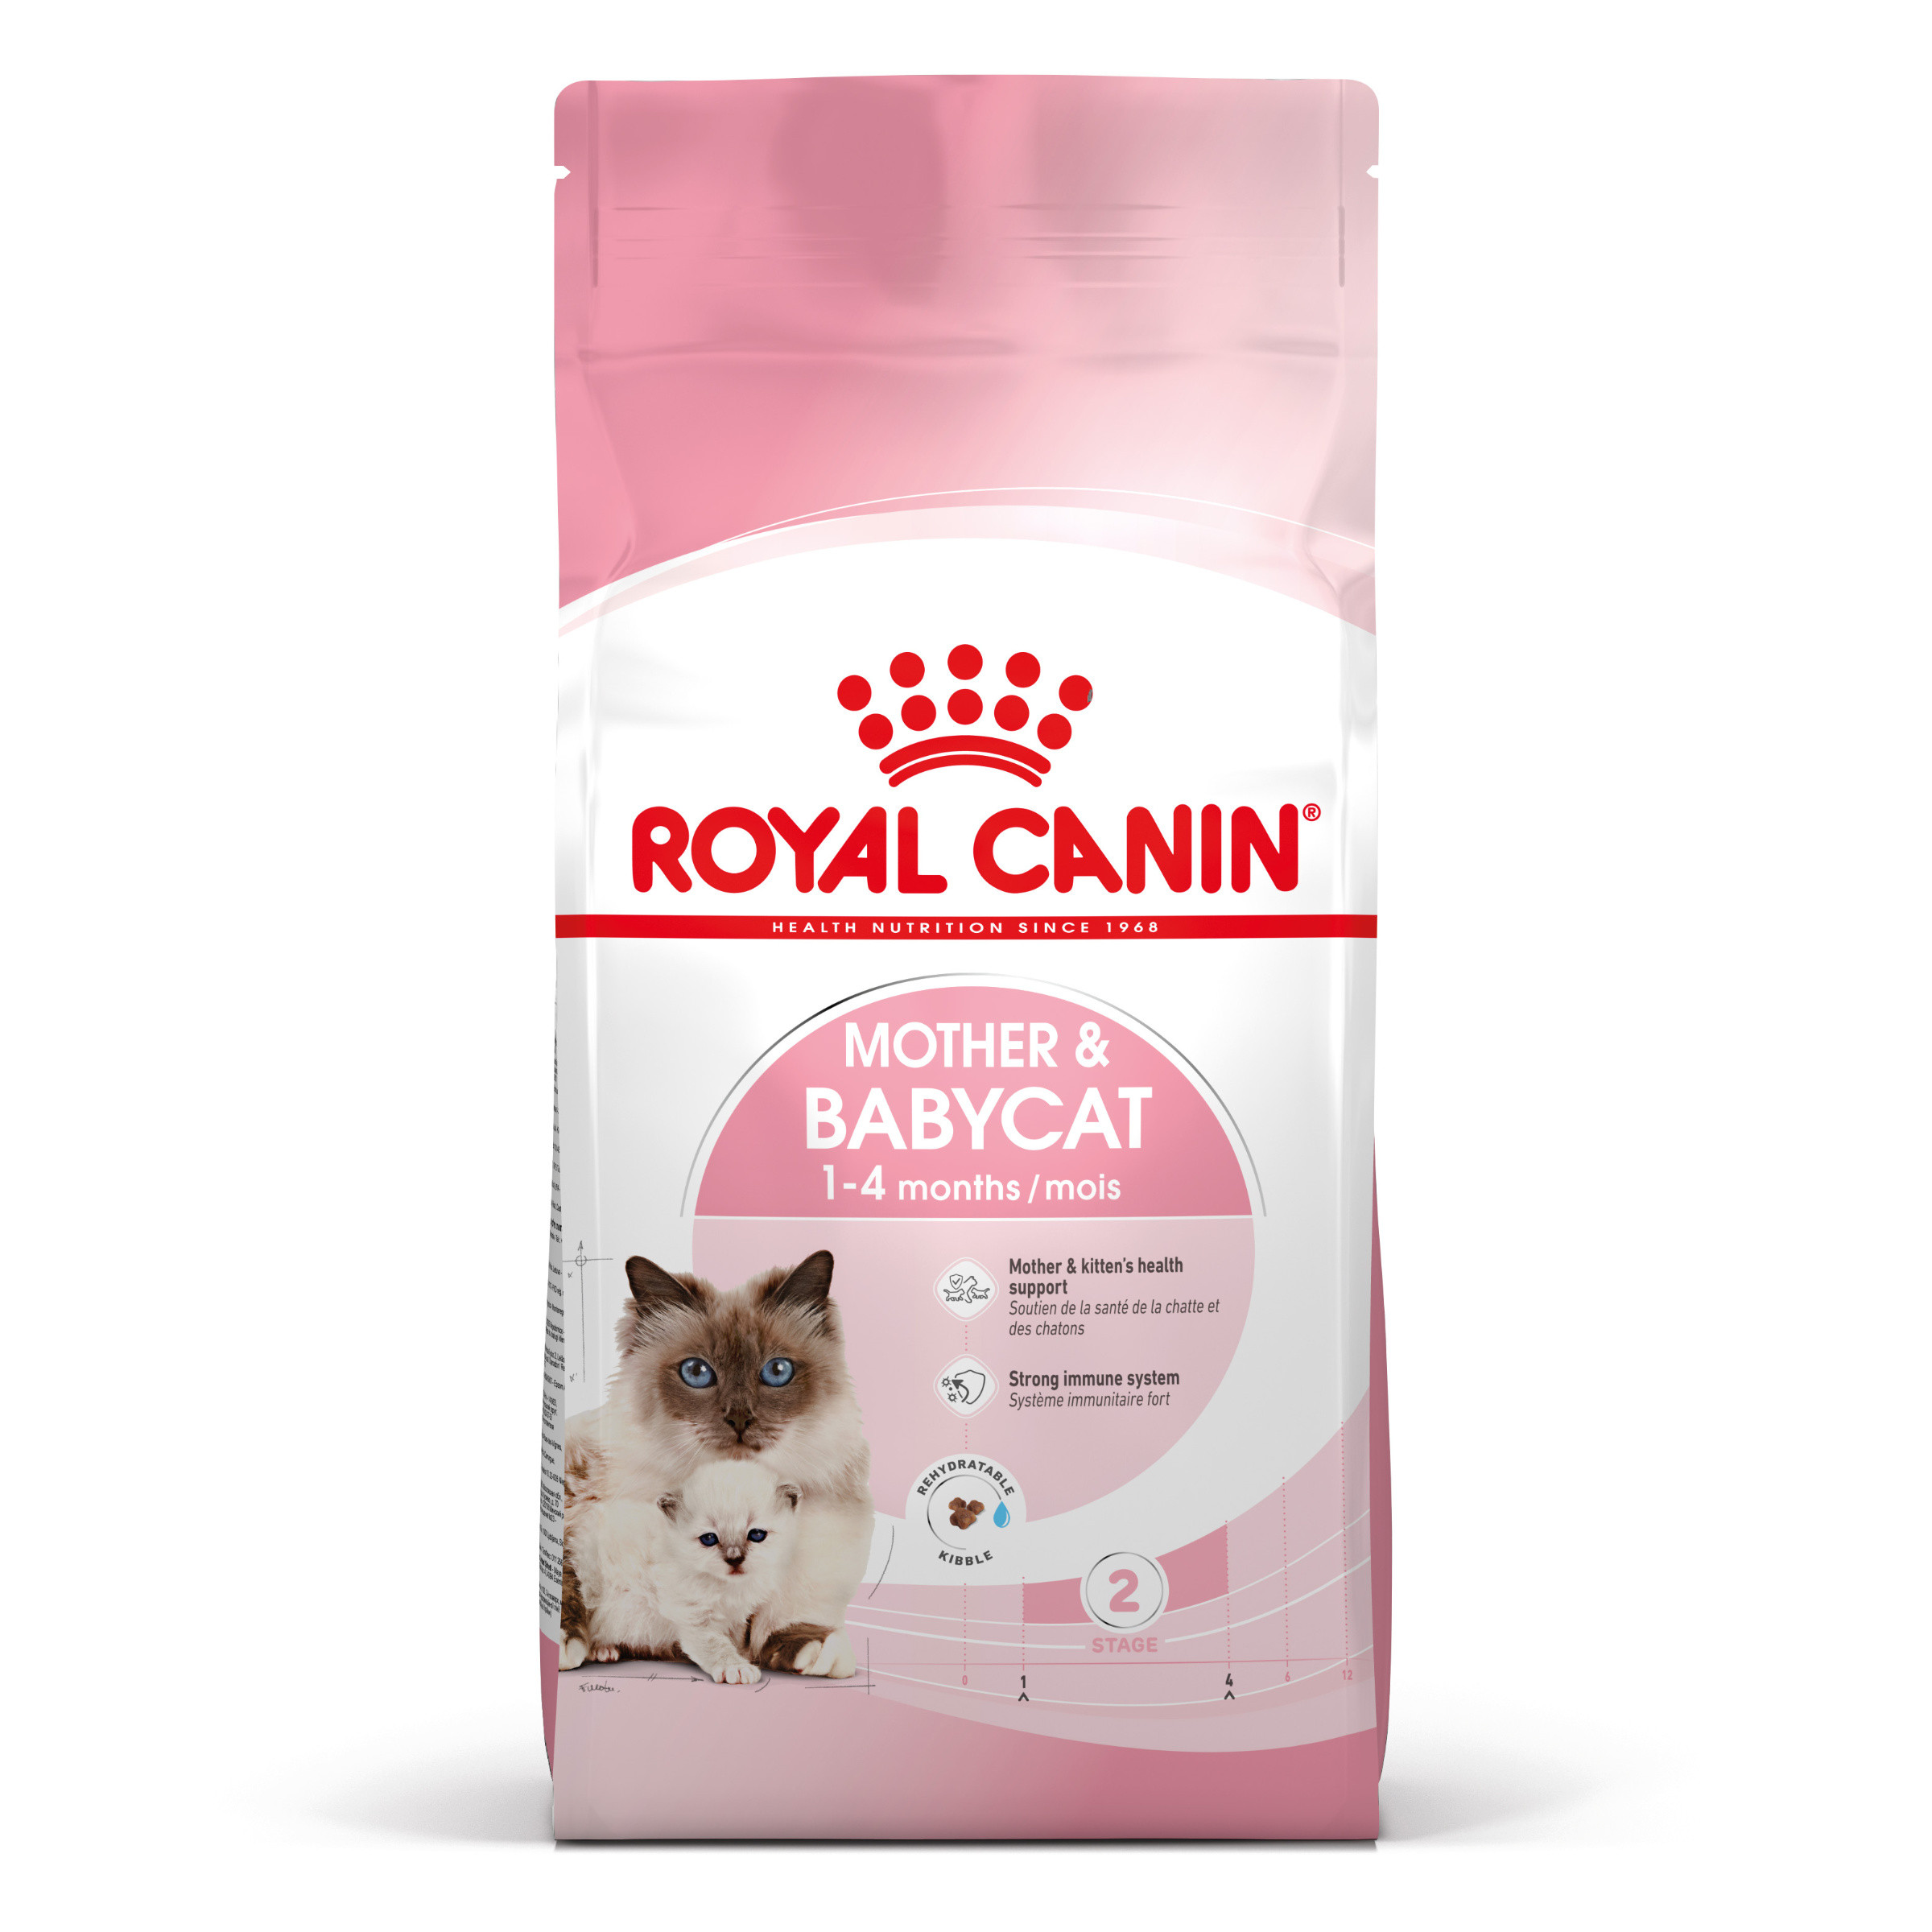 Royal Canin Mother & Babycat kattfoder